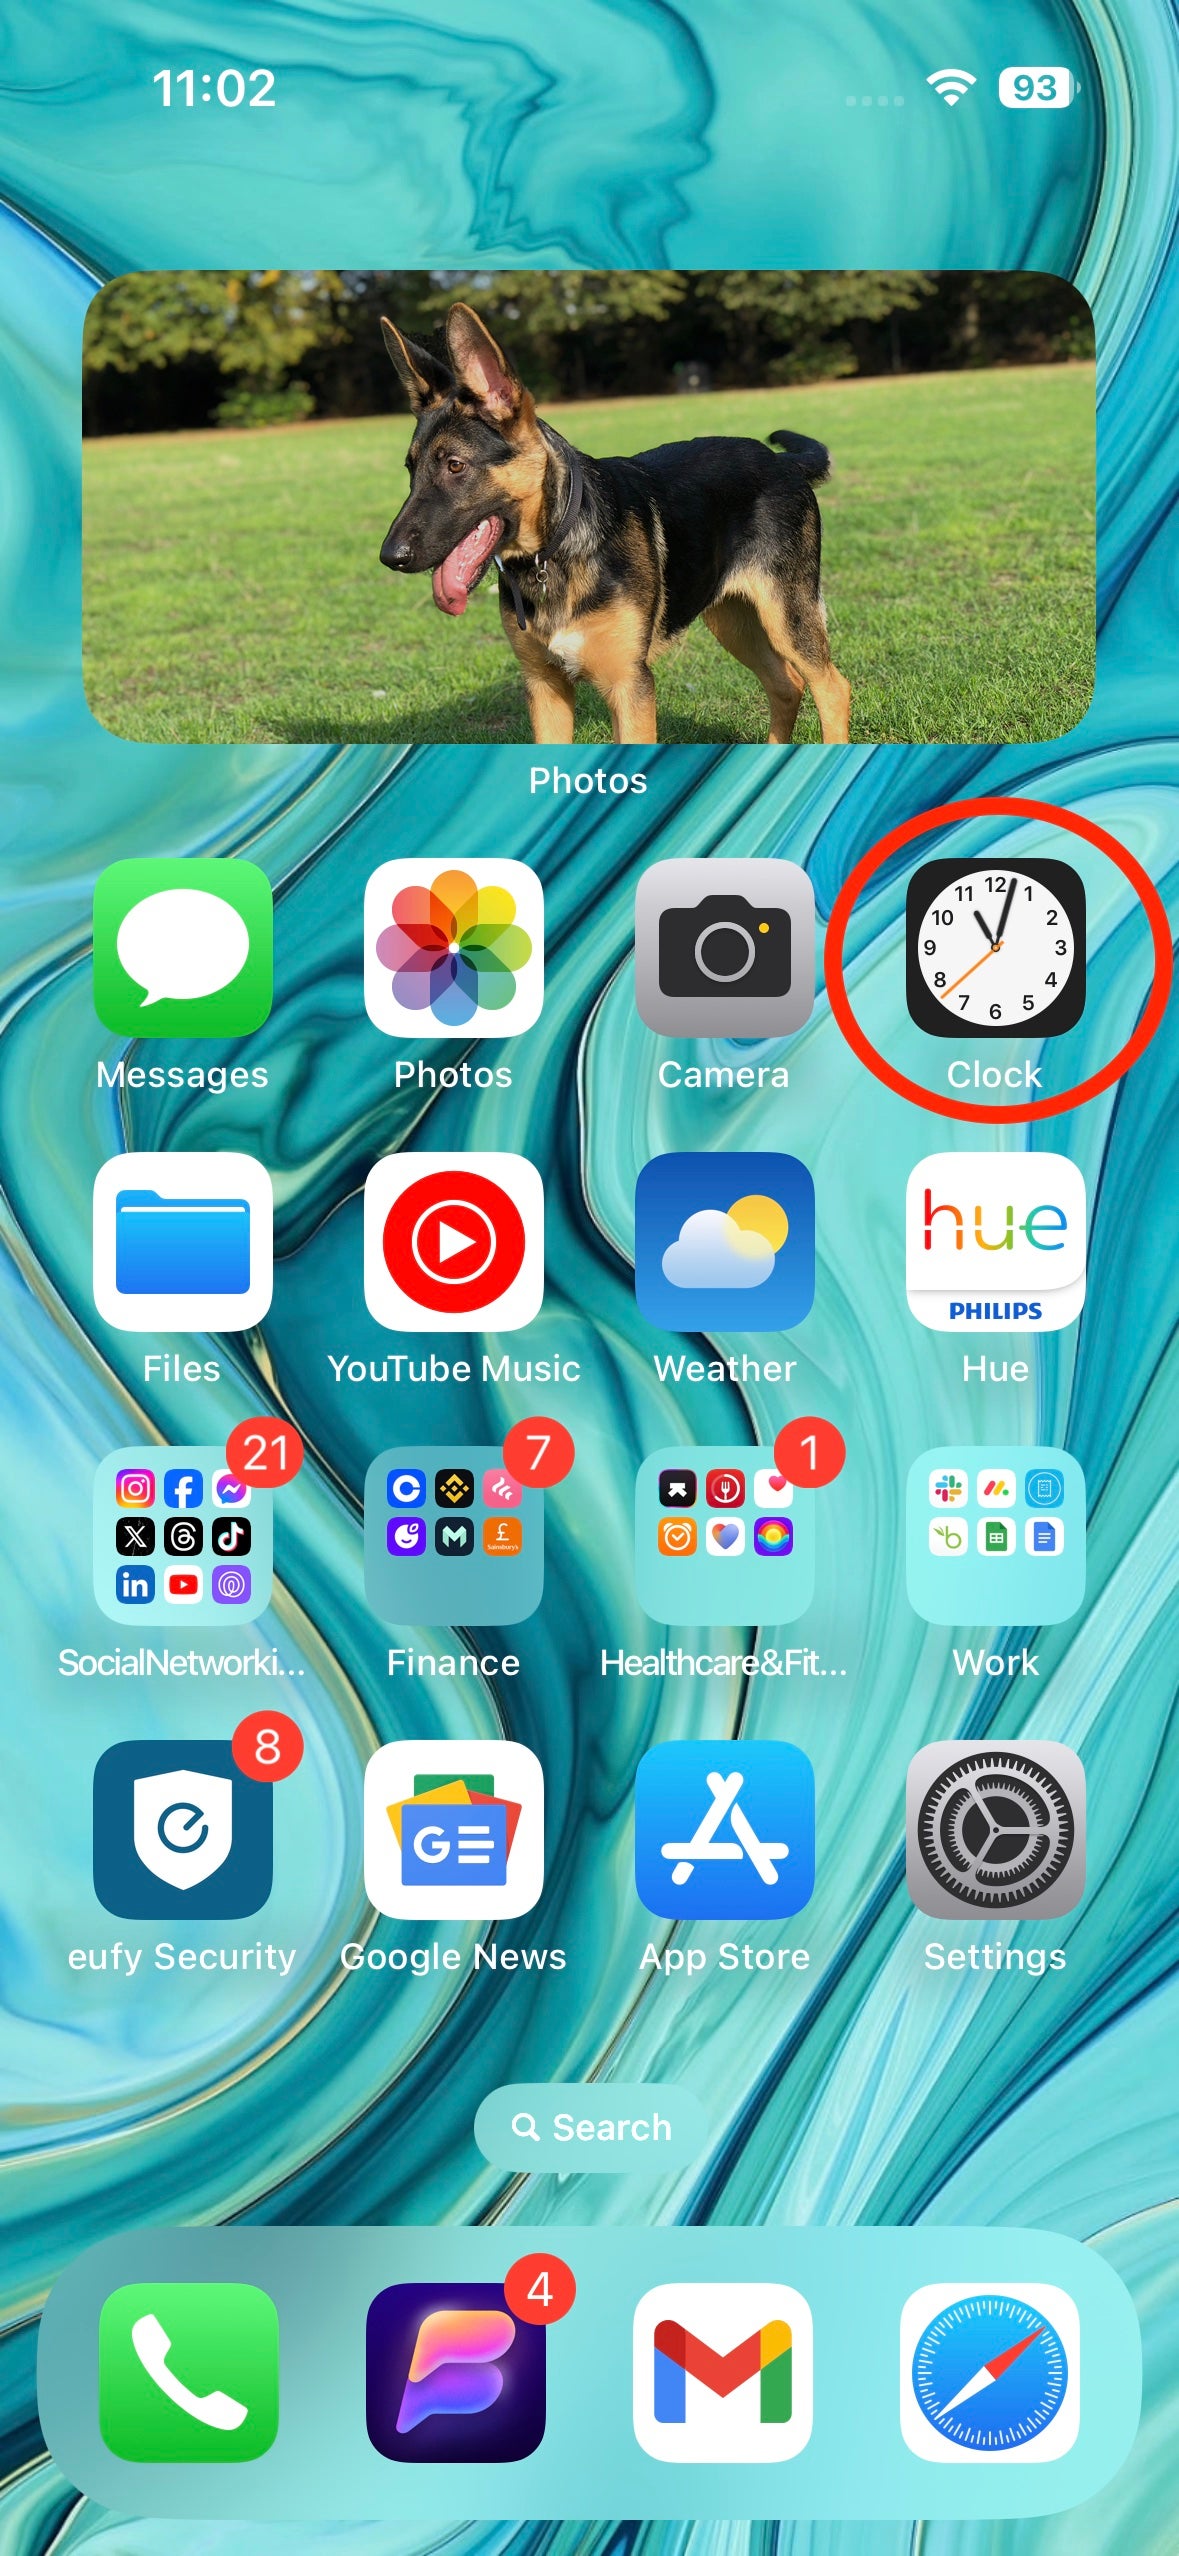 Clock app icon